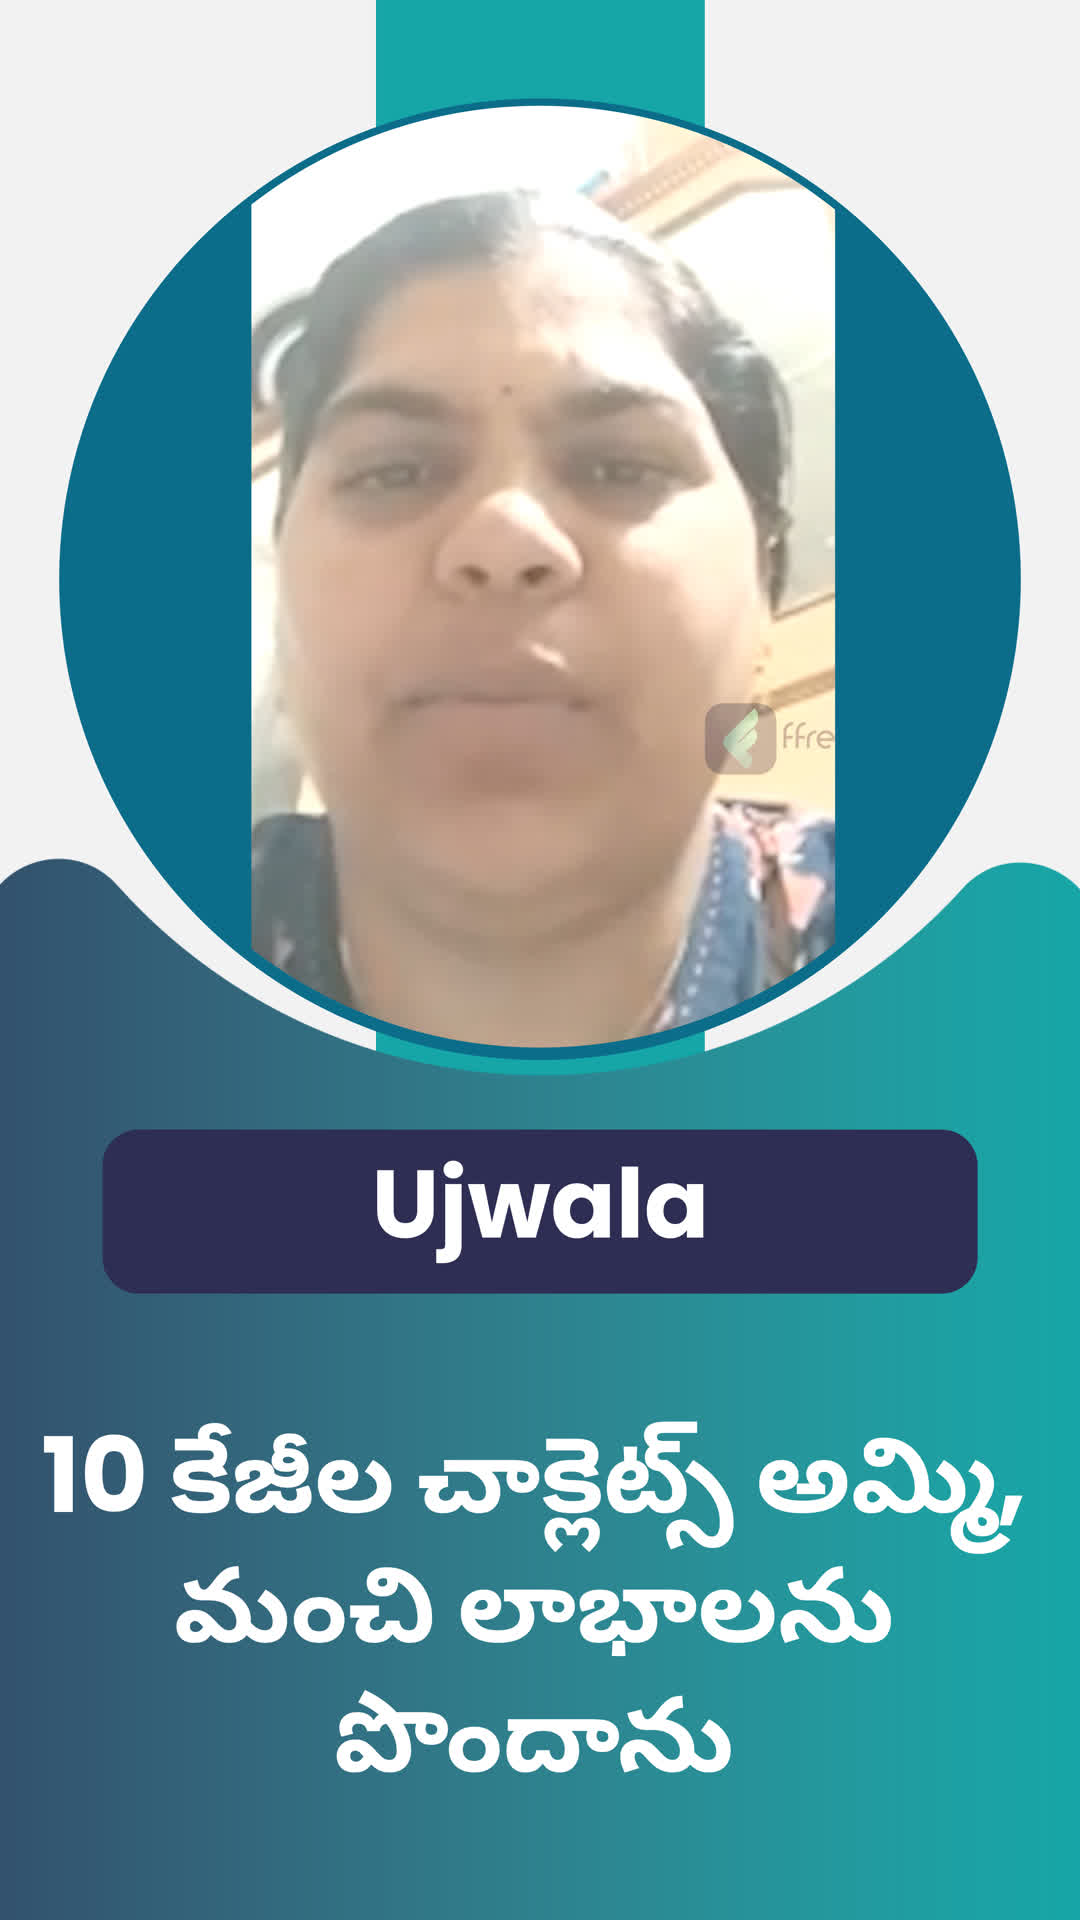 ujwala's Honest Review of ffreedom app - Hyderabad ,Telangana